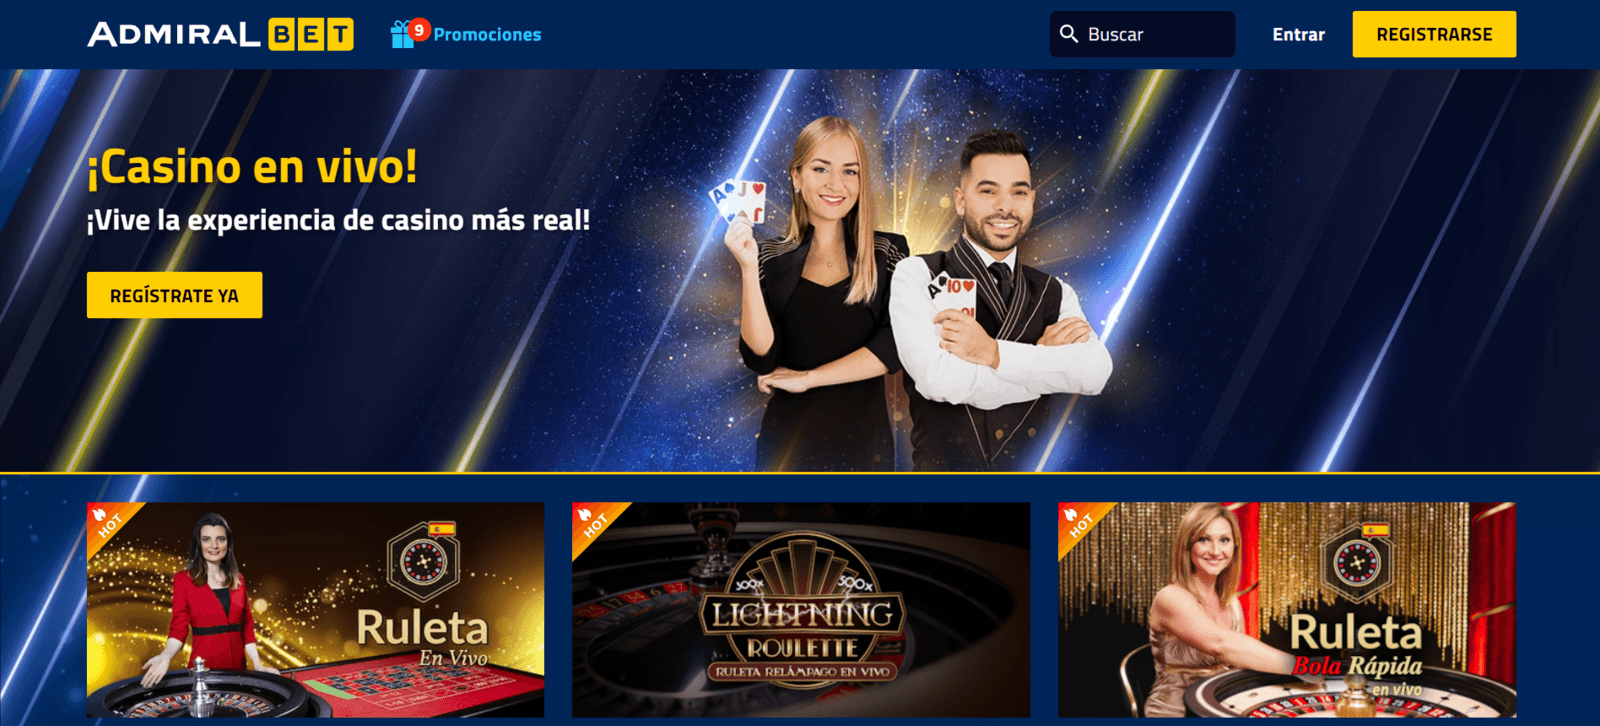 AdmiralBet Casino en vivo online en España